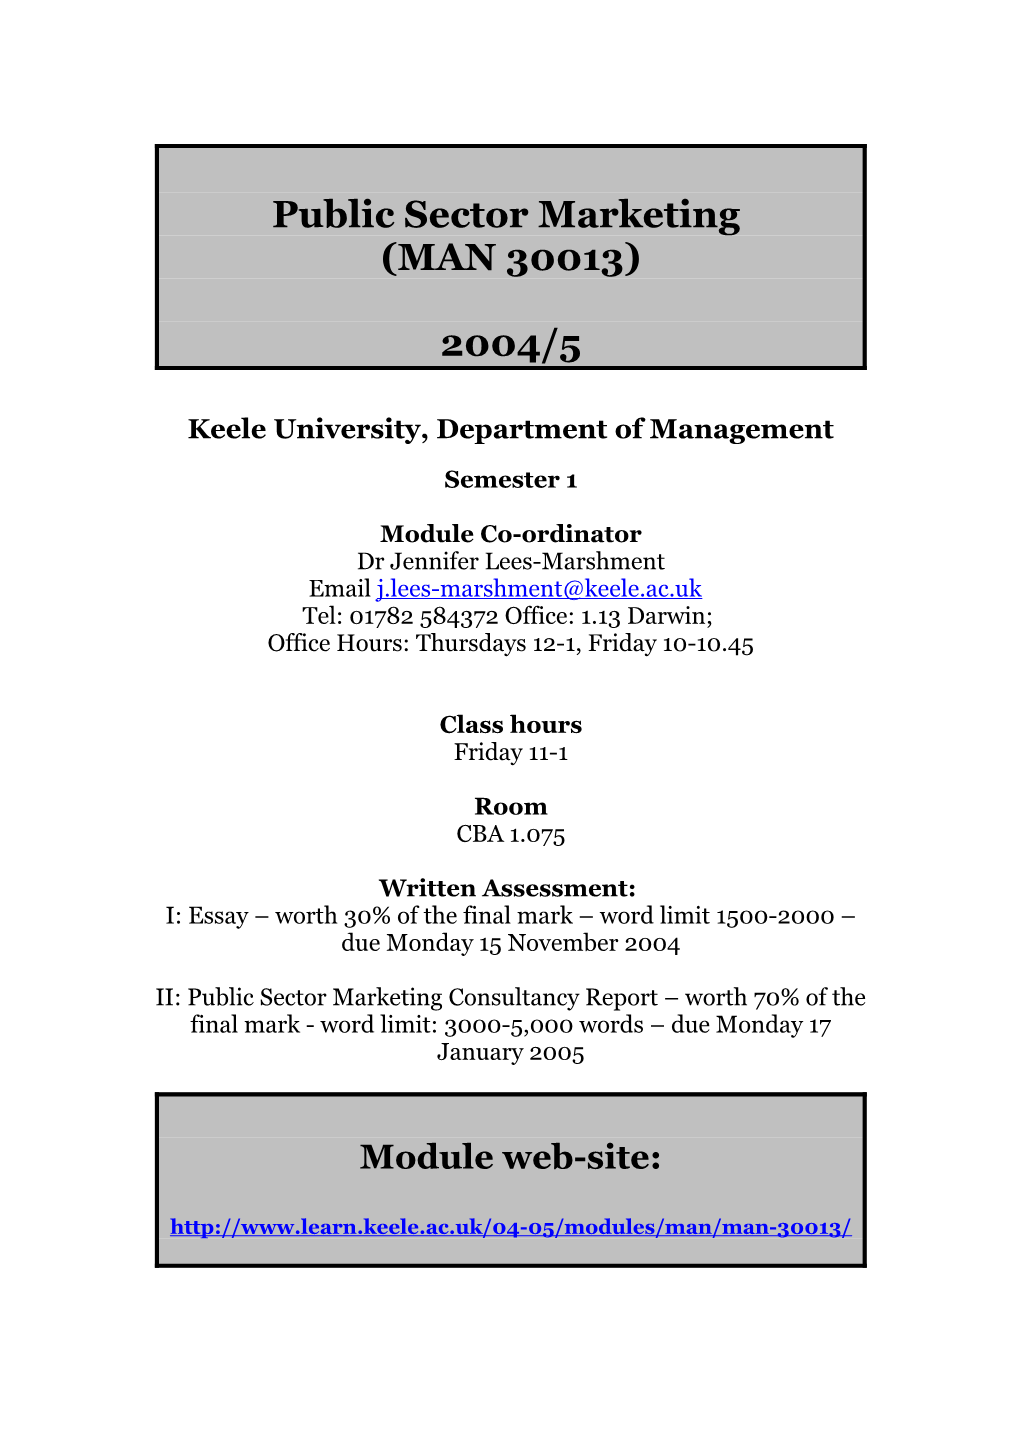 Keele University, Department of Management